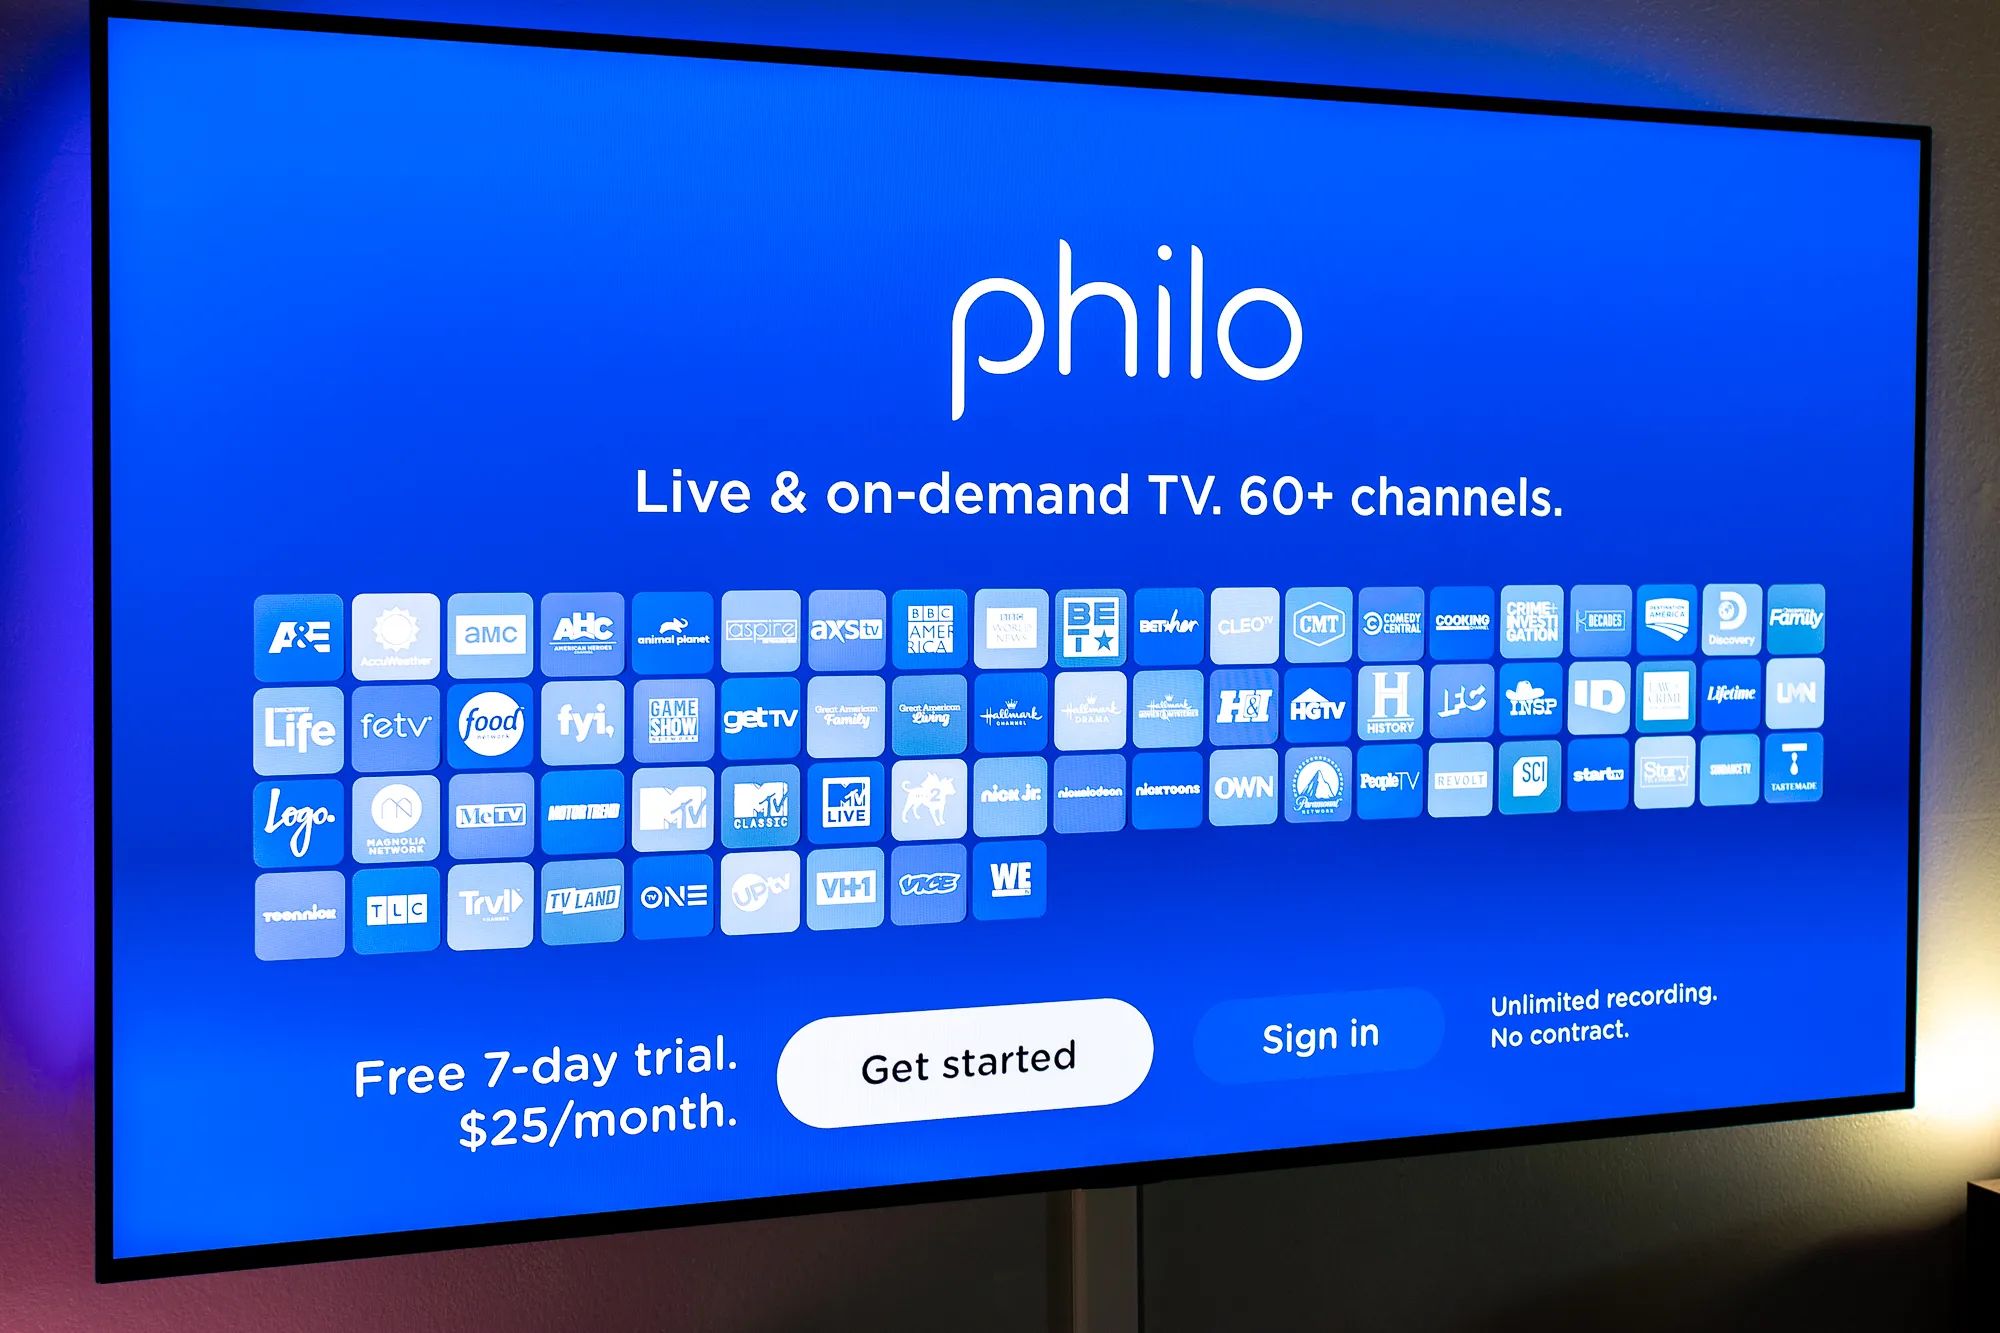 How To Download Philo On Vizio Smart TV